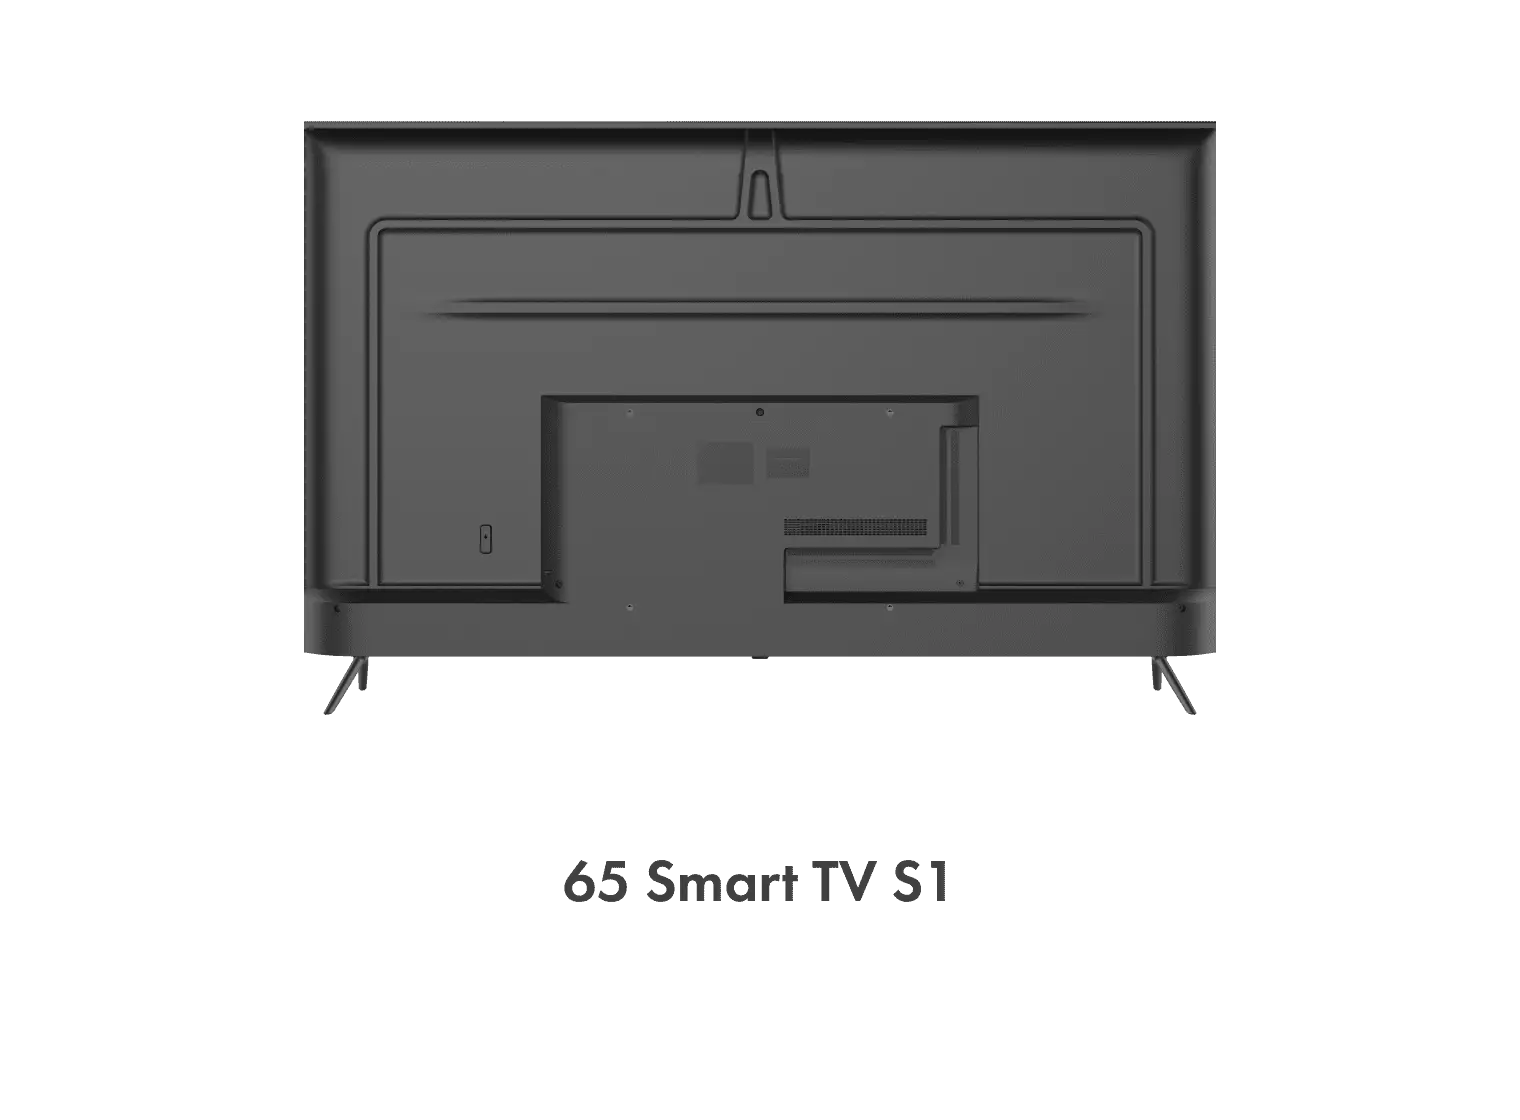 Телевизор Haier 65 Smart TV S1